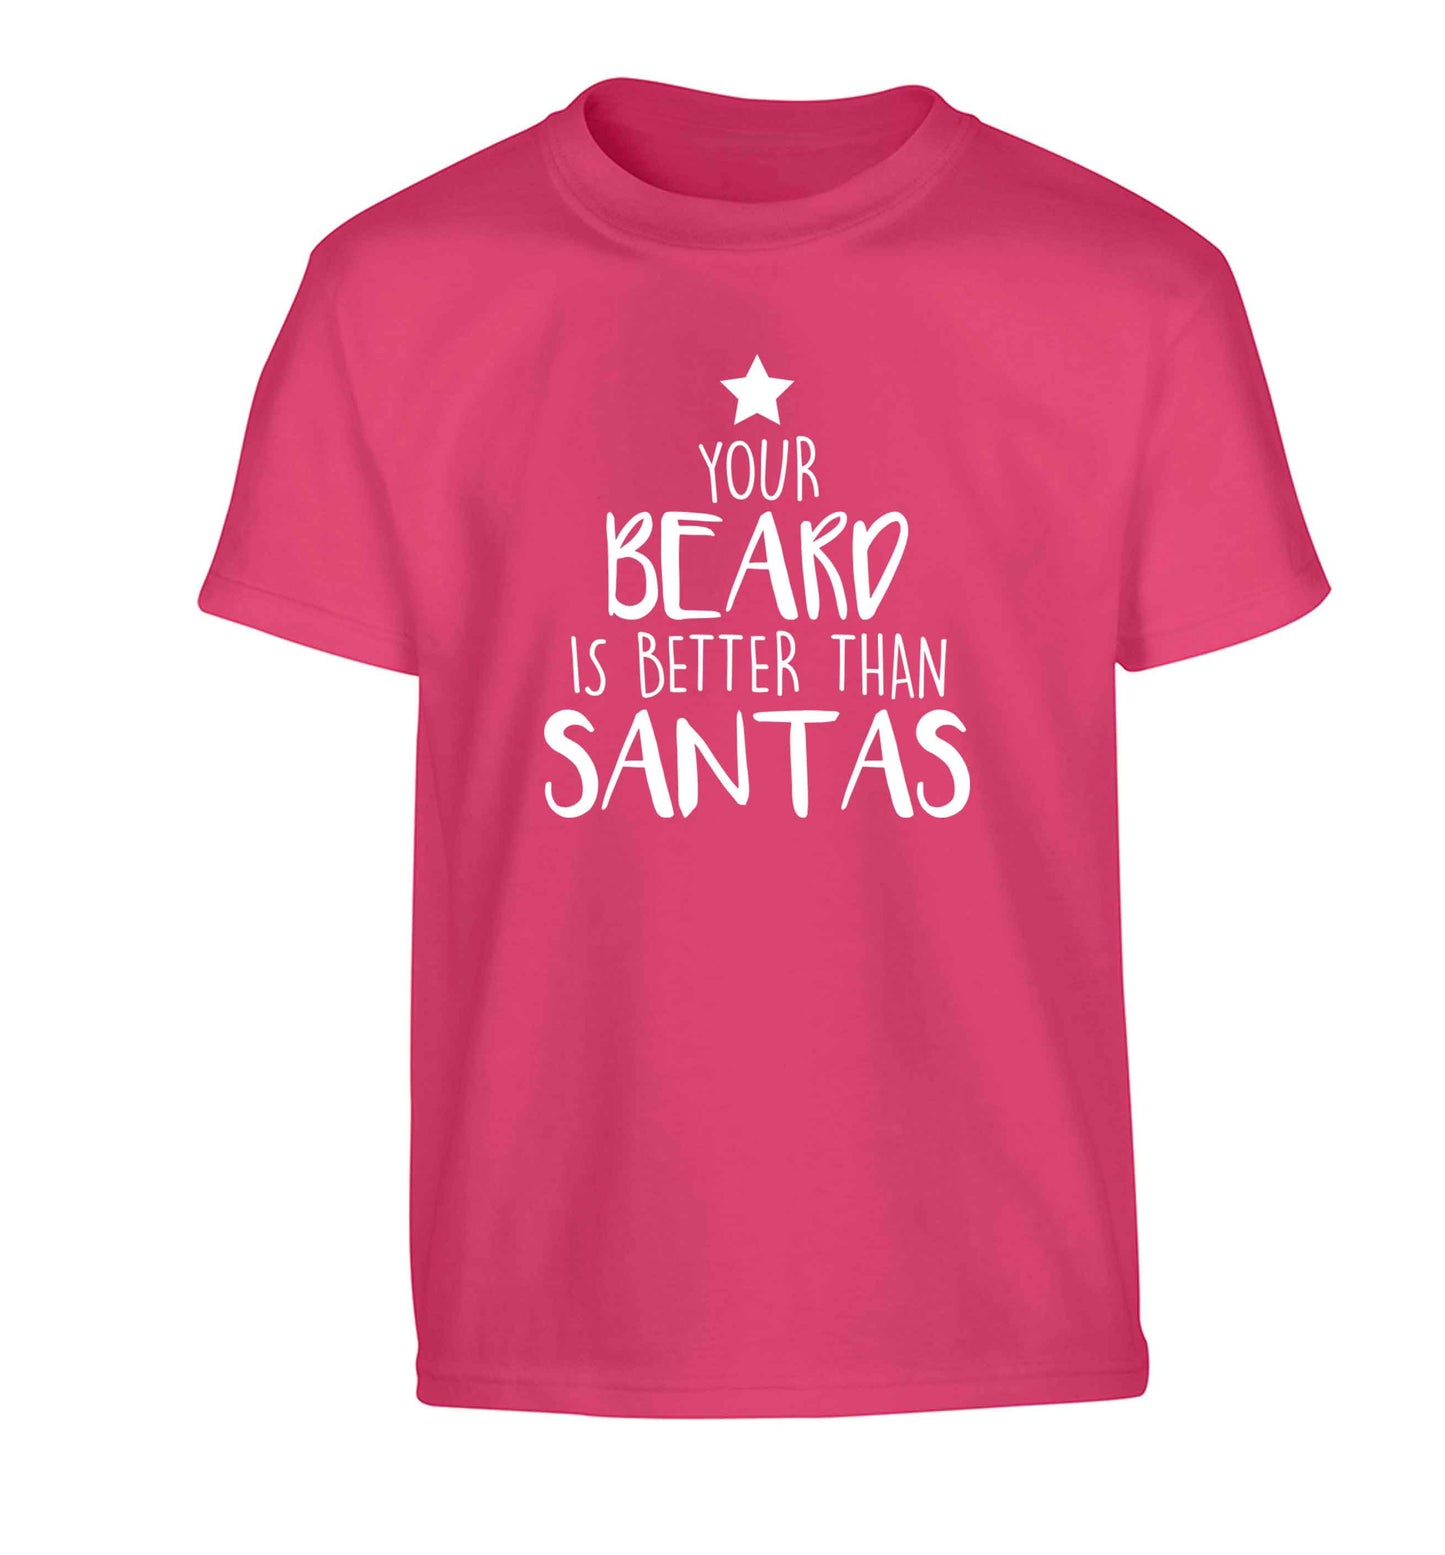 Your Beard Better than Santas Children's pink Tshirt 12-13 Years